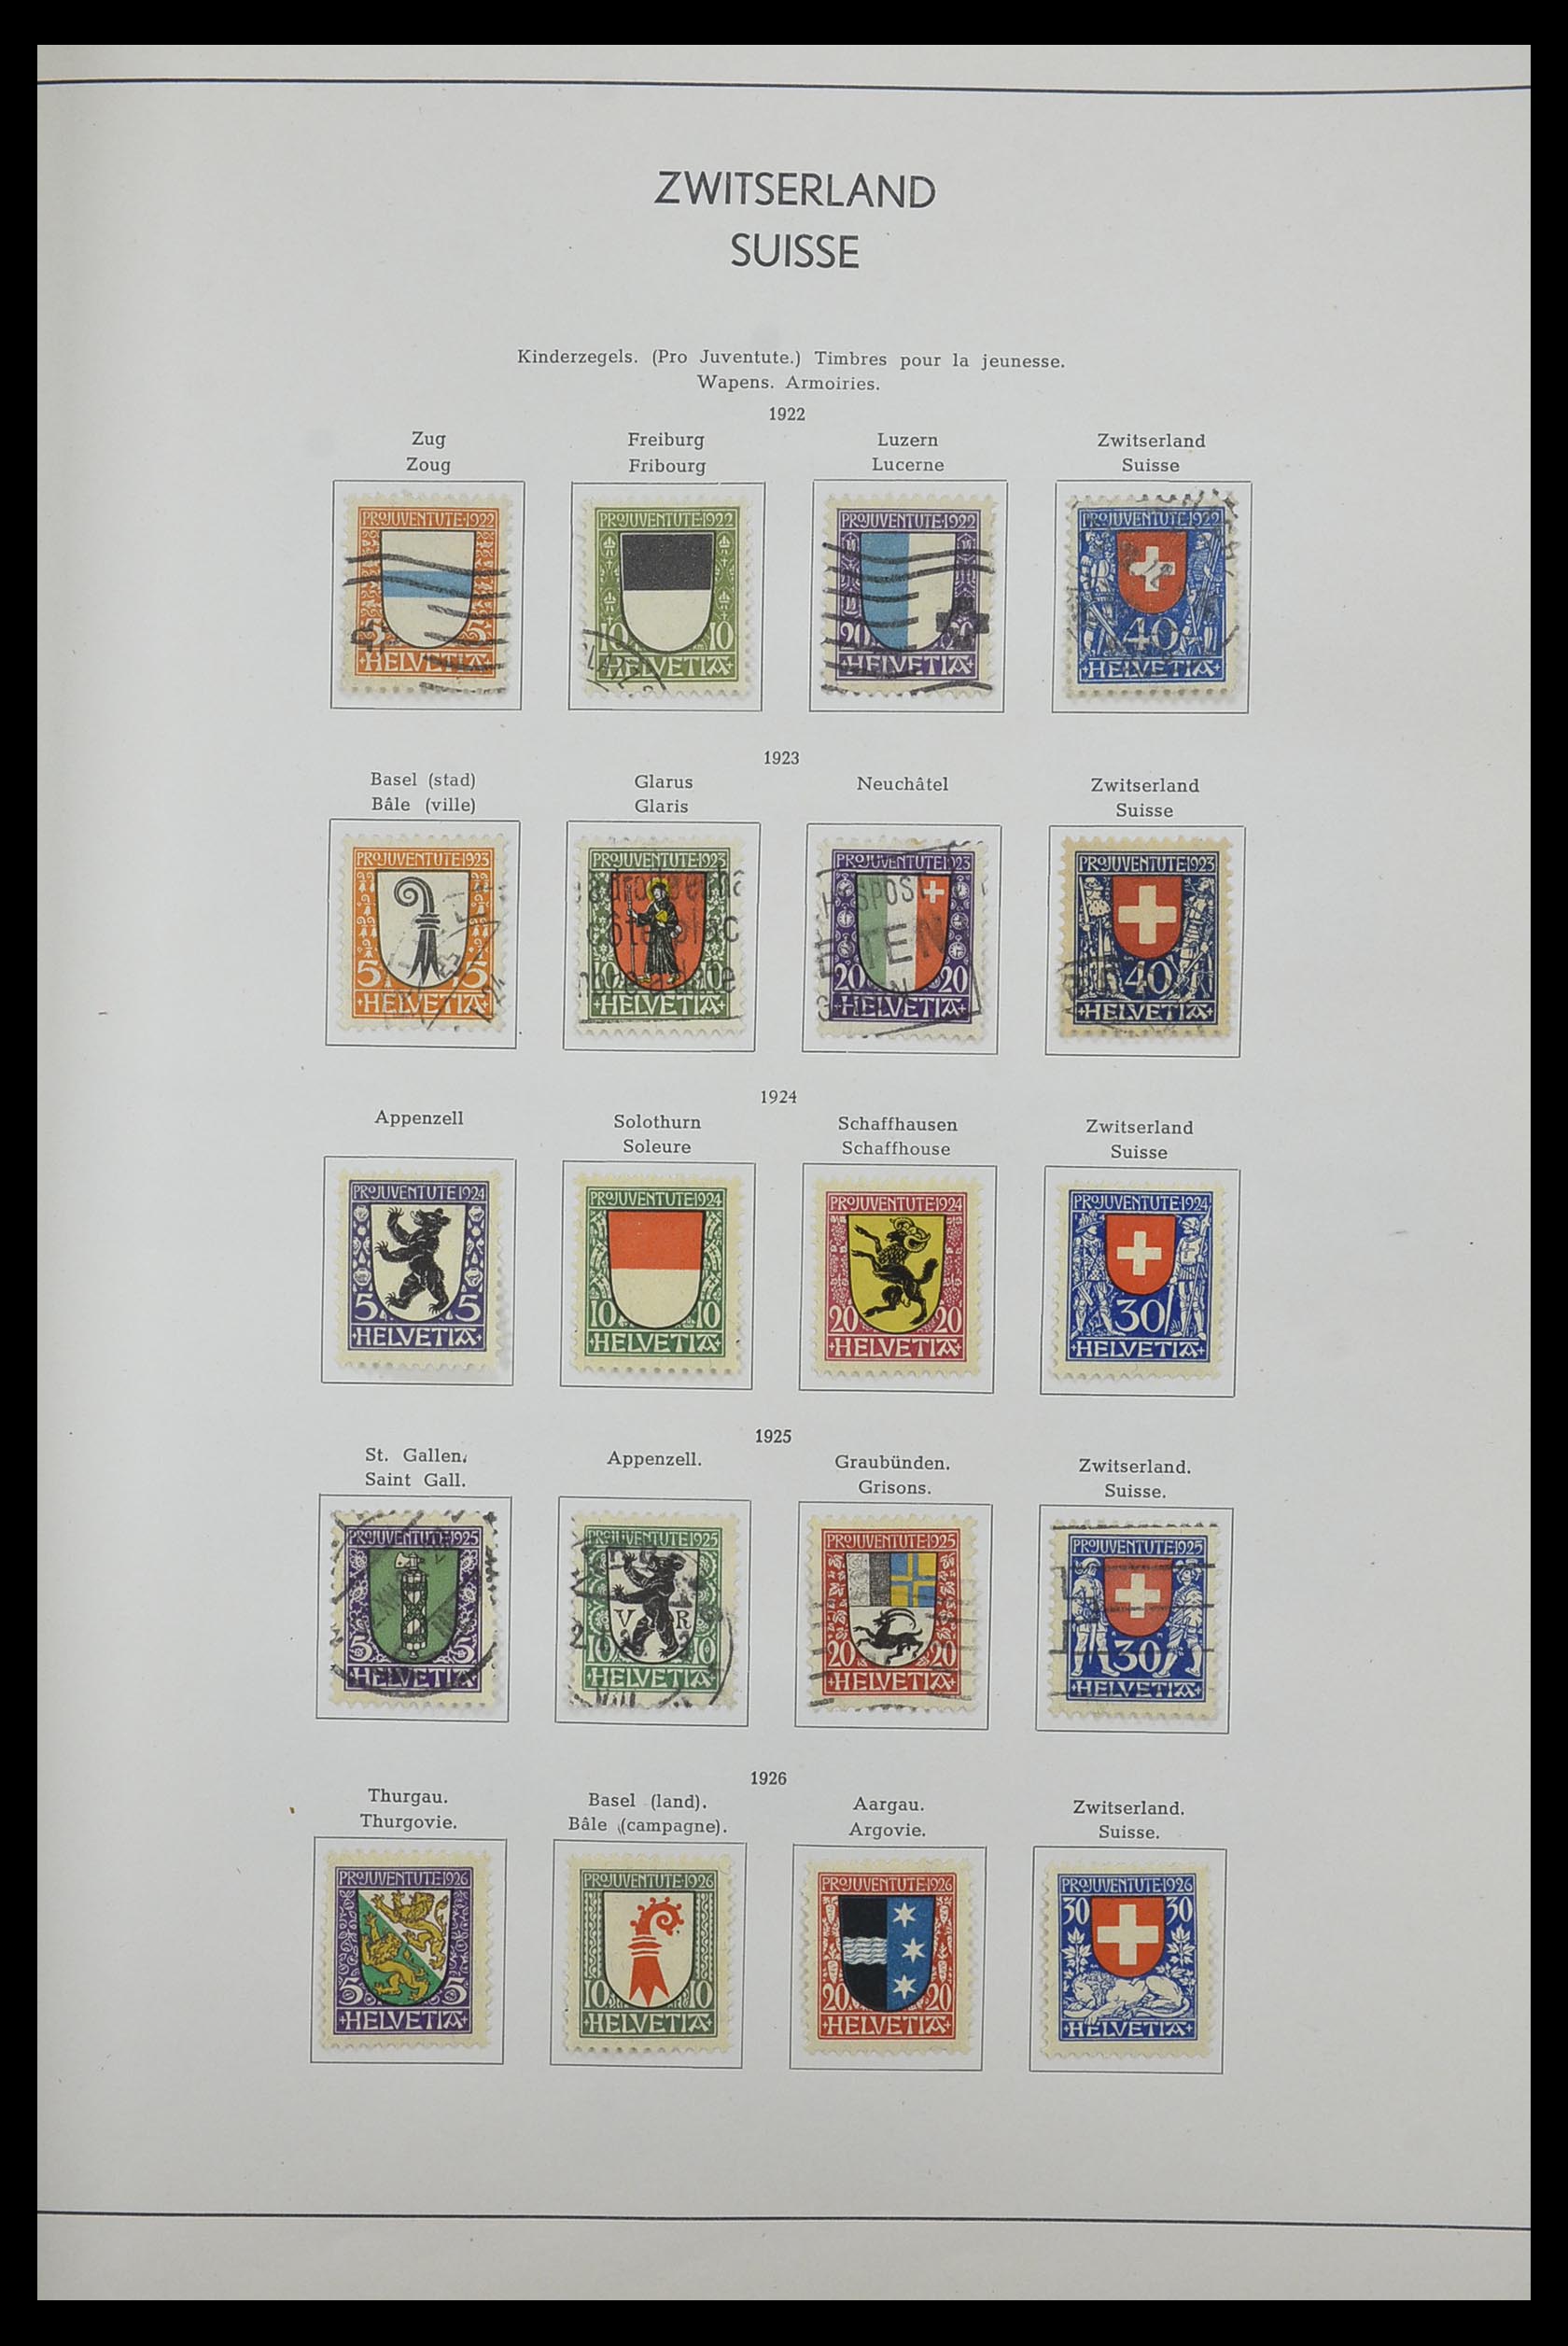 33601 010 - Stamp collection 33601 Switzerland 1854-1985.